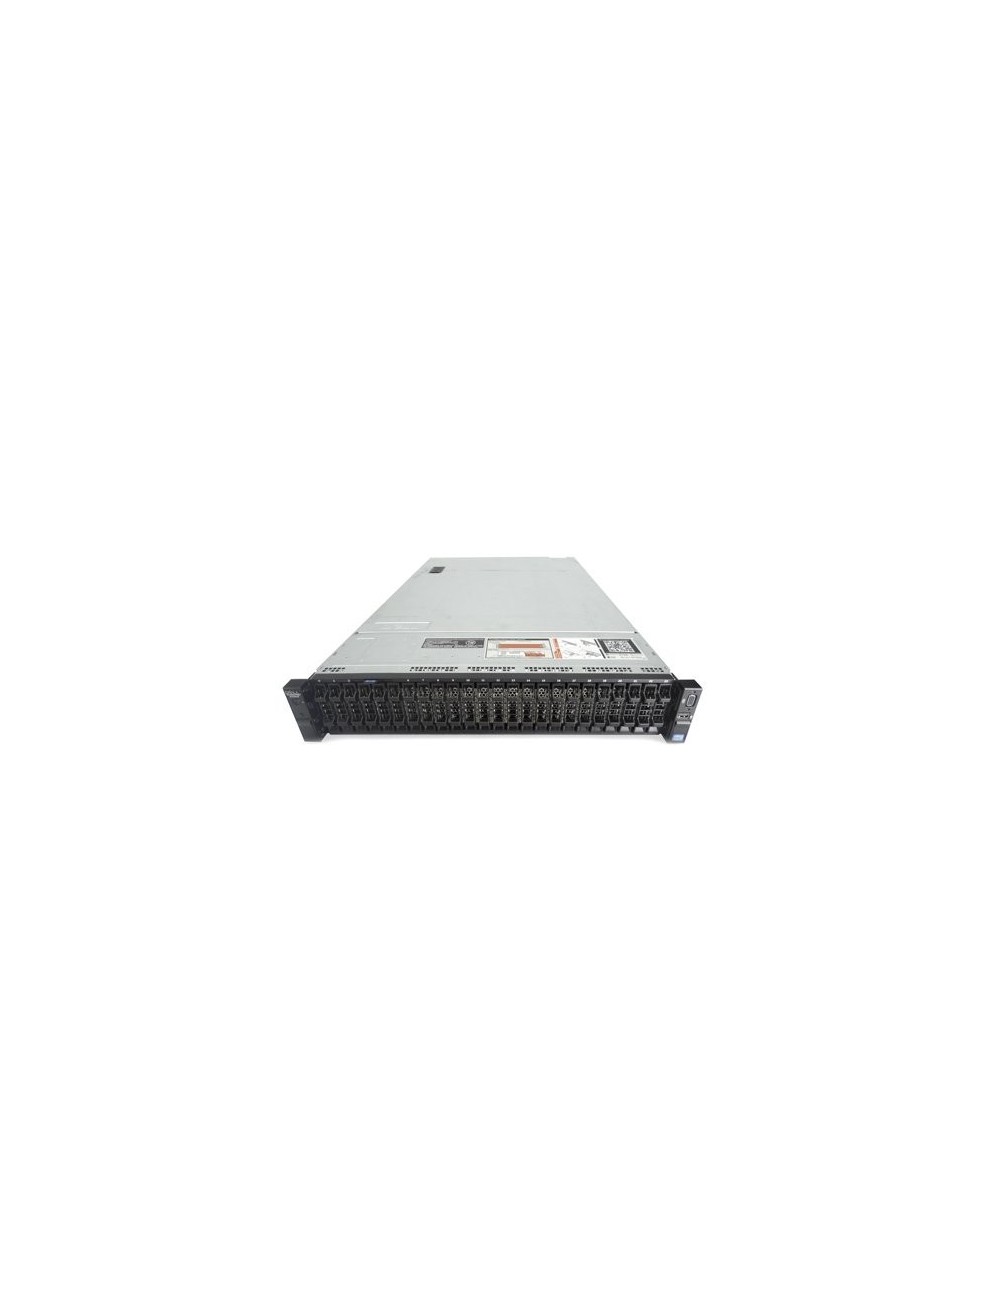 Dell PowerEdge R720xd 24x SFF, 2x E5-2680 8C, 144GB RAM, 2x 480GB SSD, H710P 1GB, 2x PSU, Rail Kit